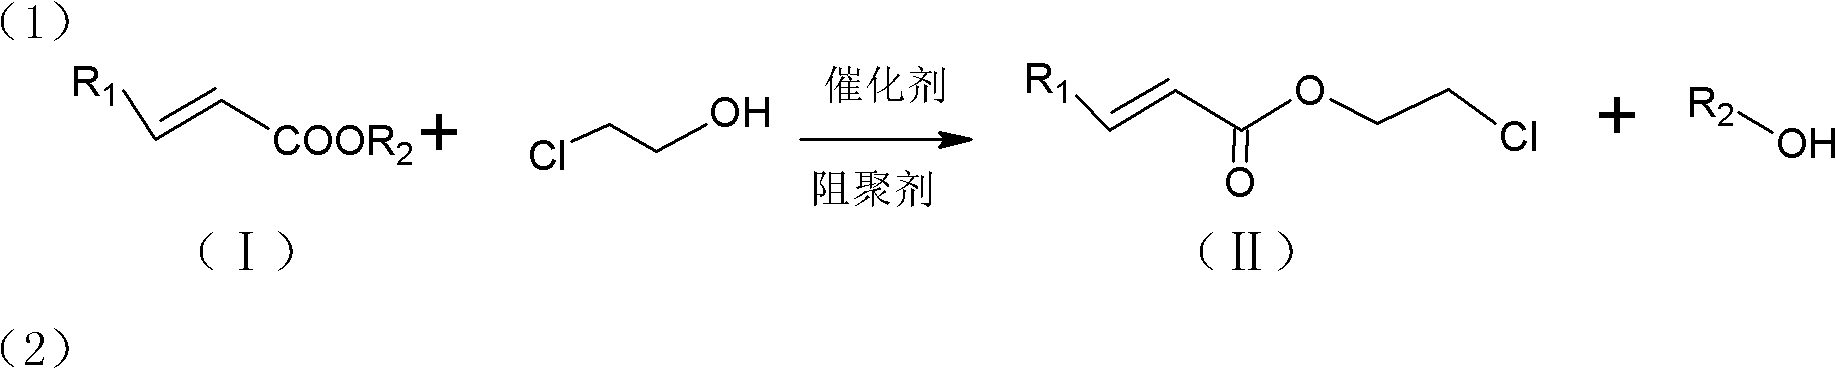 A method of transesterification to produce (meth)acryloyloxyethyltrimethylammonium chloride